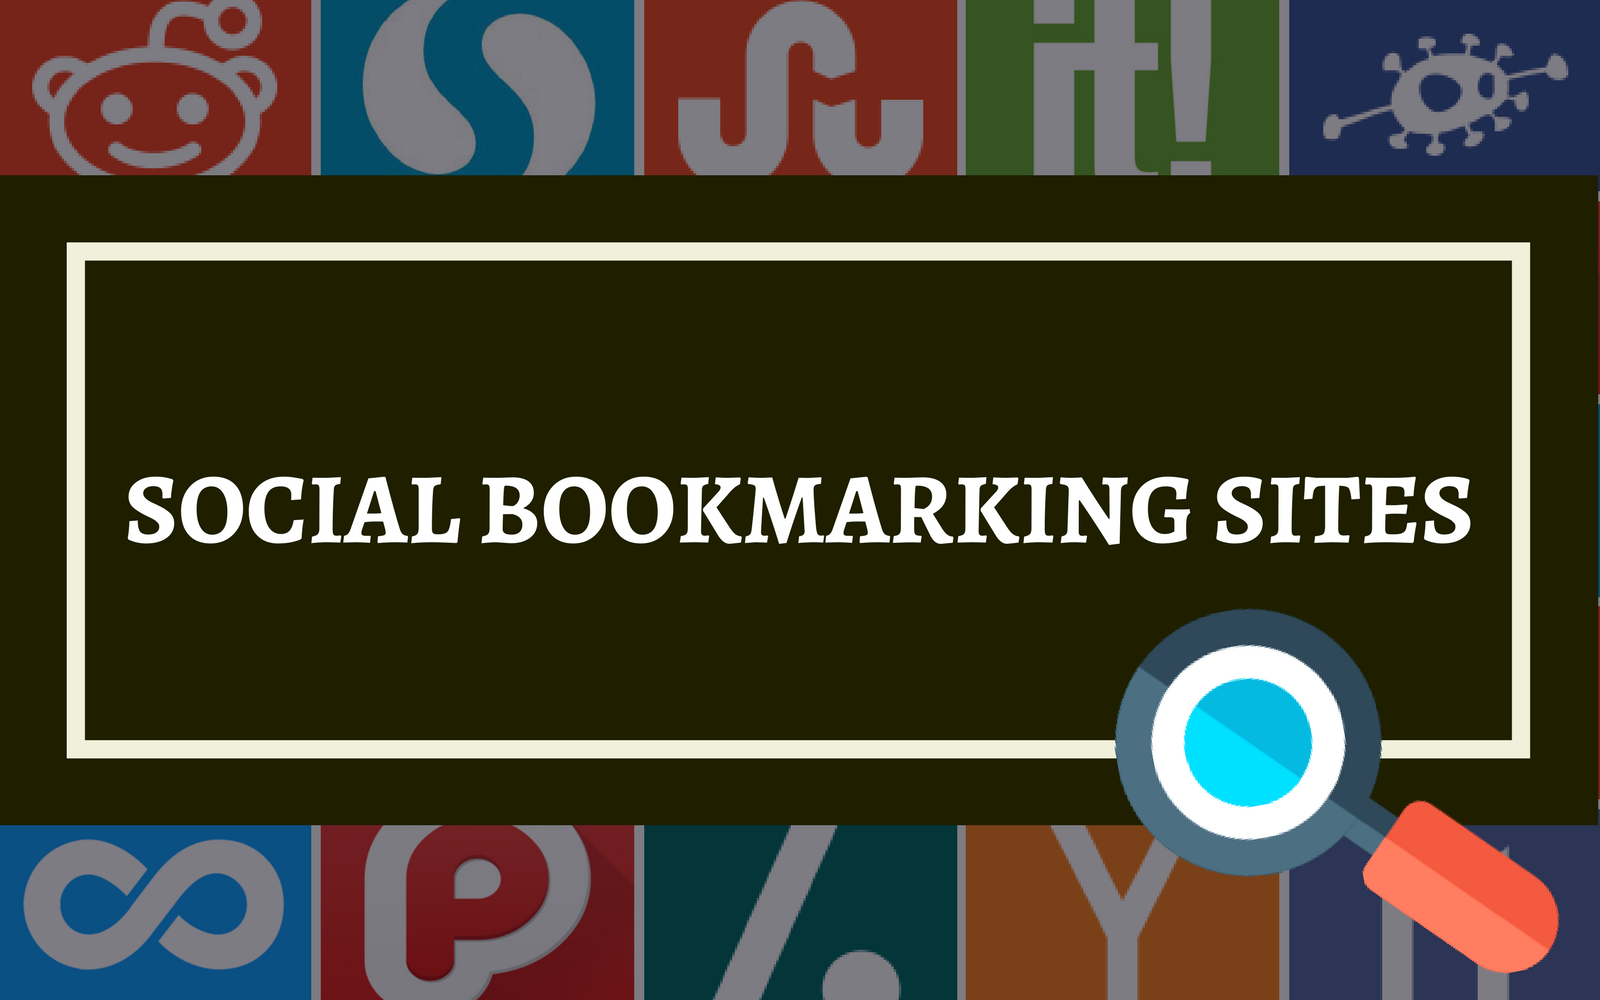 social bookmarking sites list image